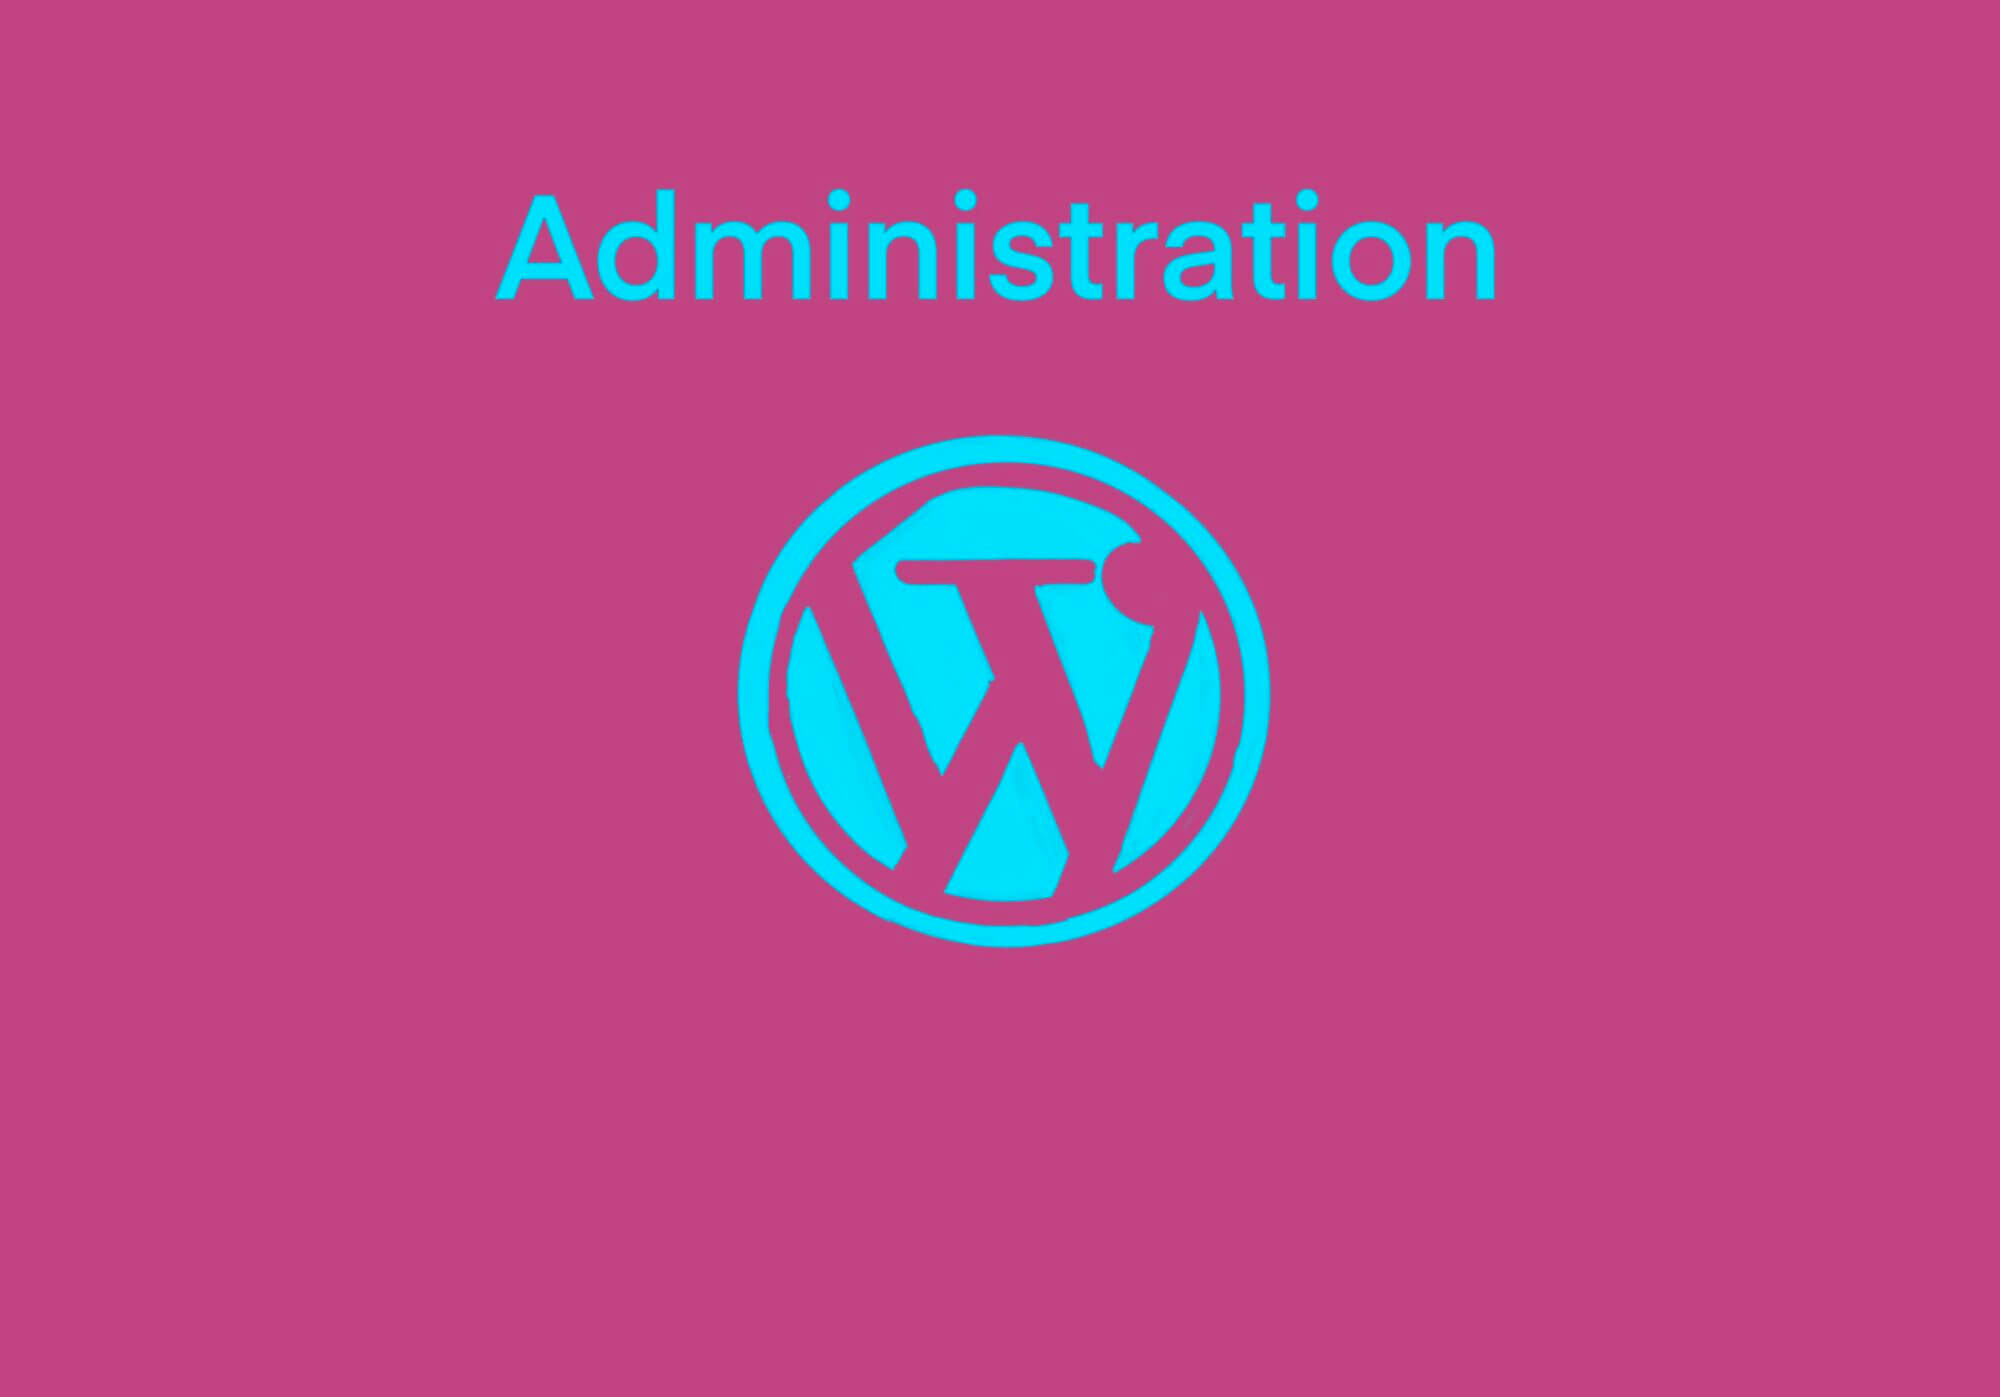 [WP] WordPress – ログイン/アクセス制限に関する設定 – ID24132 [2020/10/09]工事中